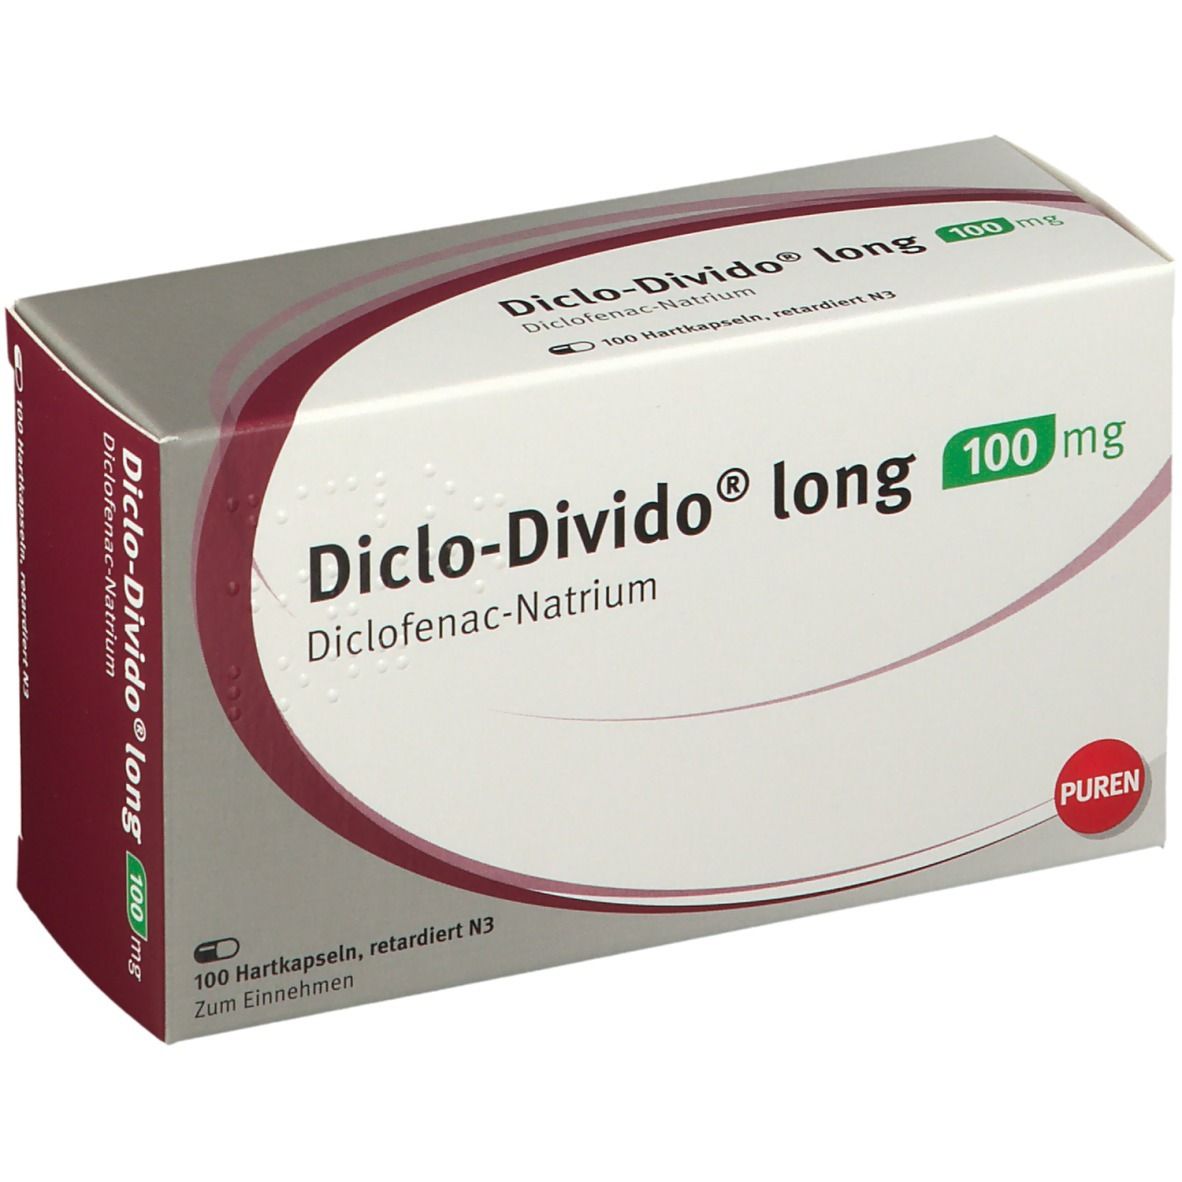 Diclo-Divido® long 100 mg